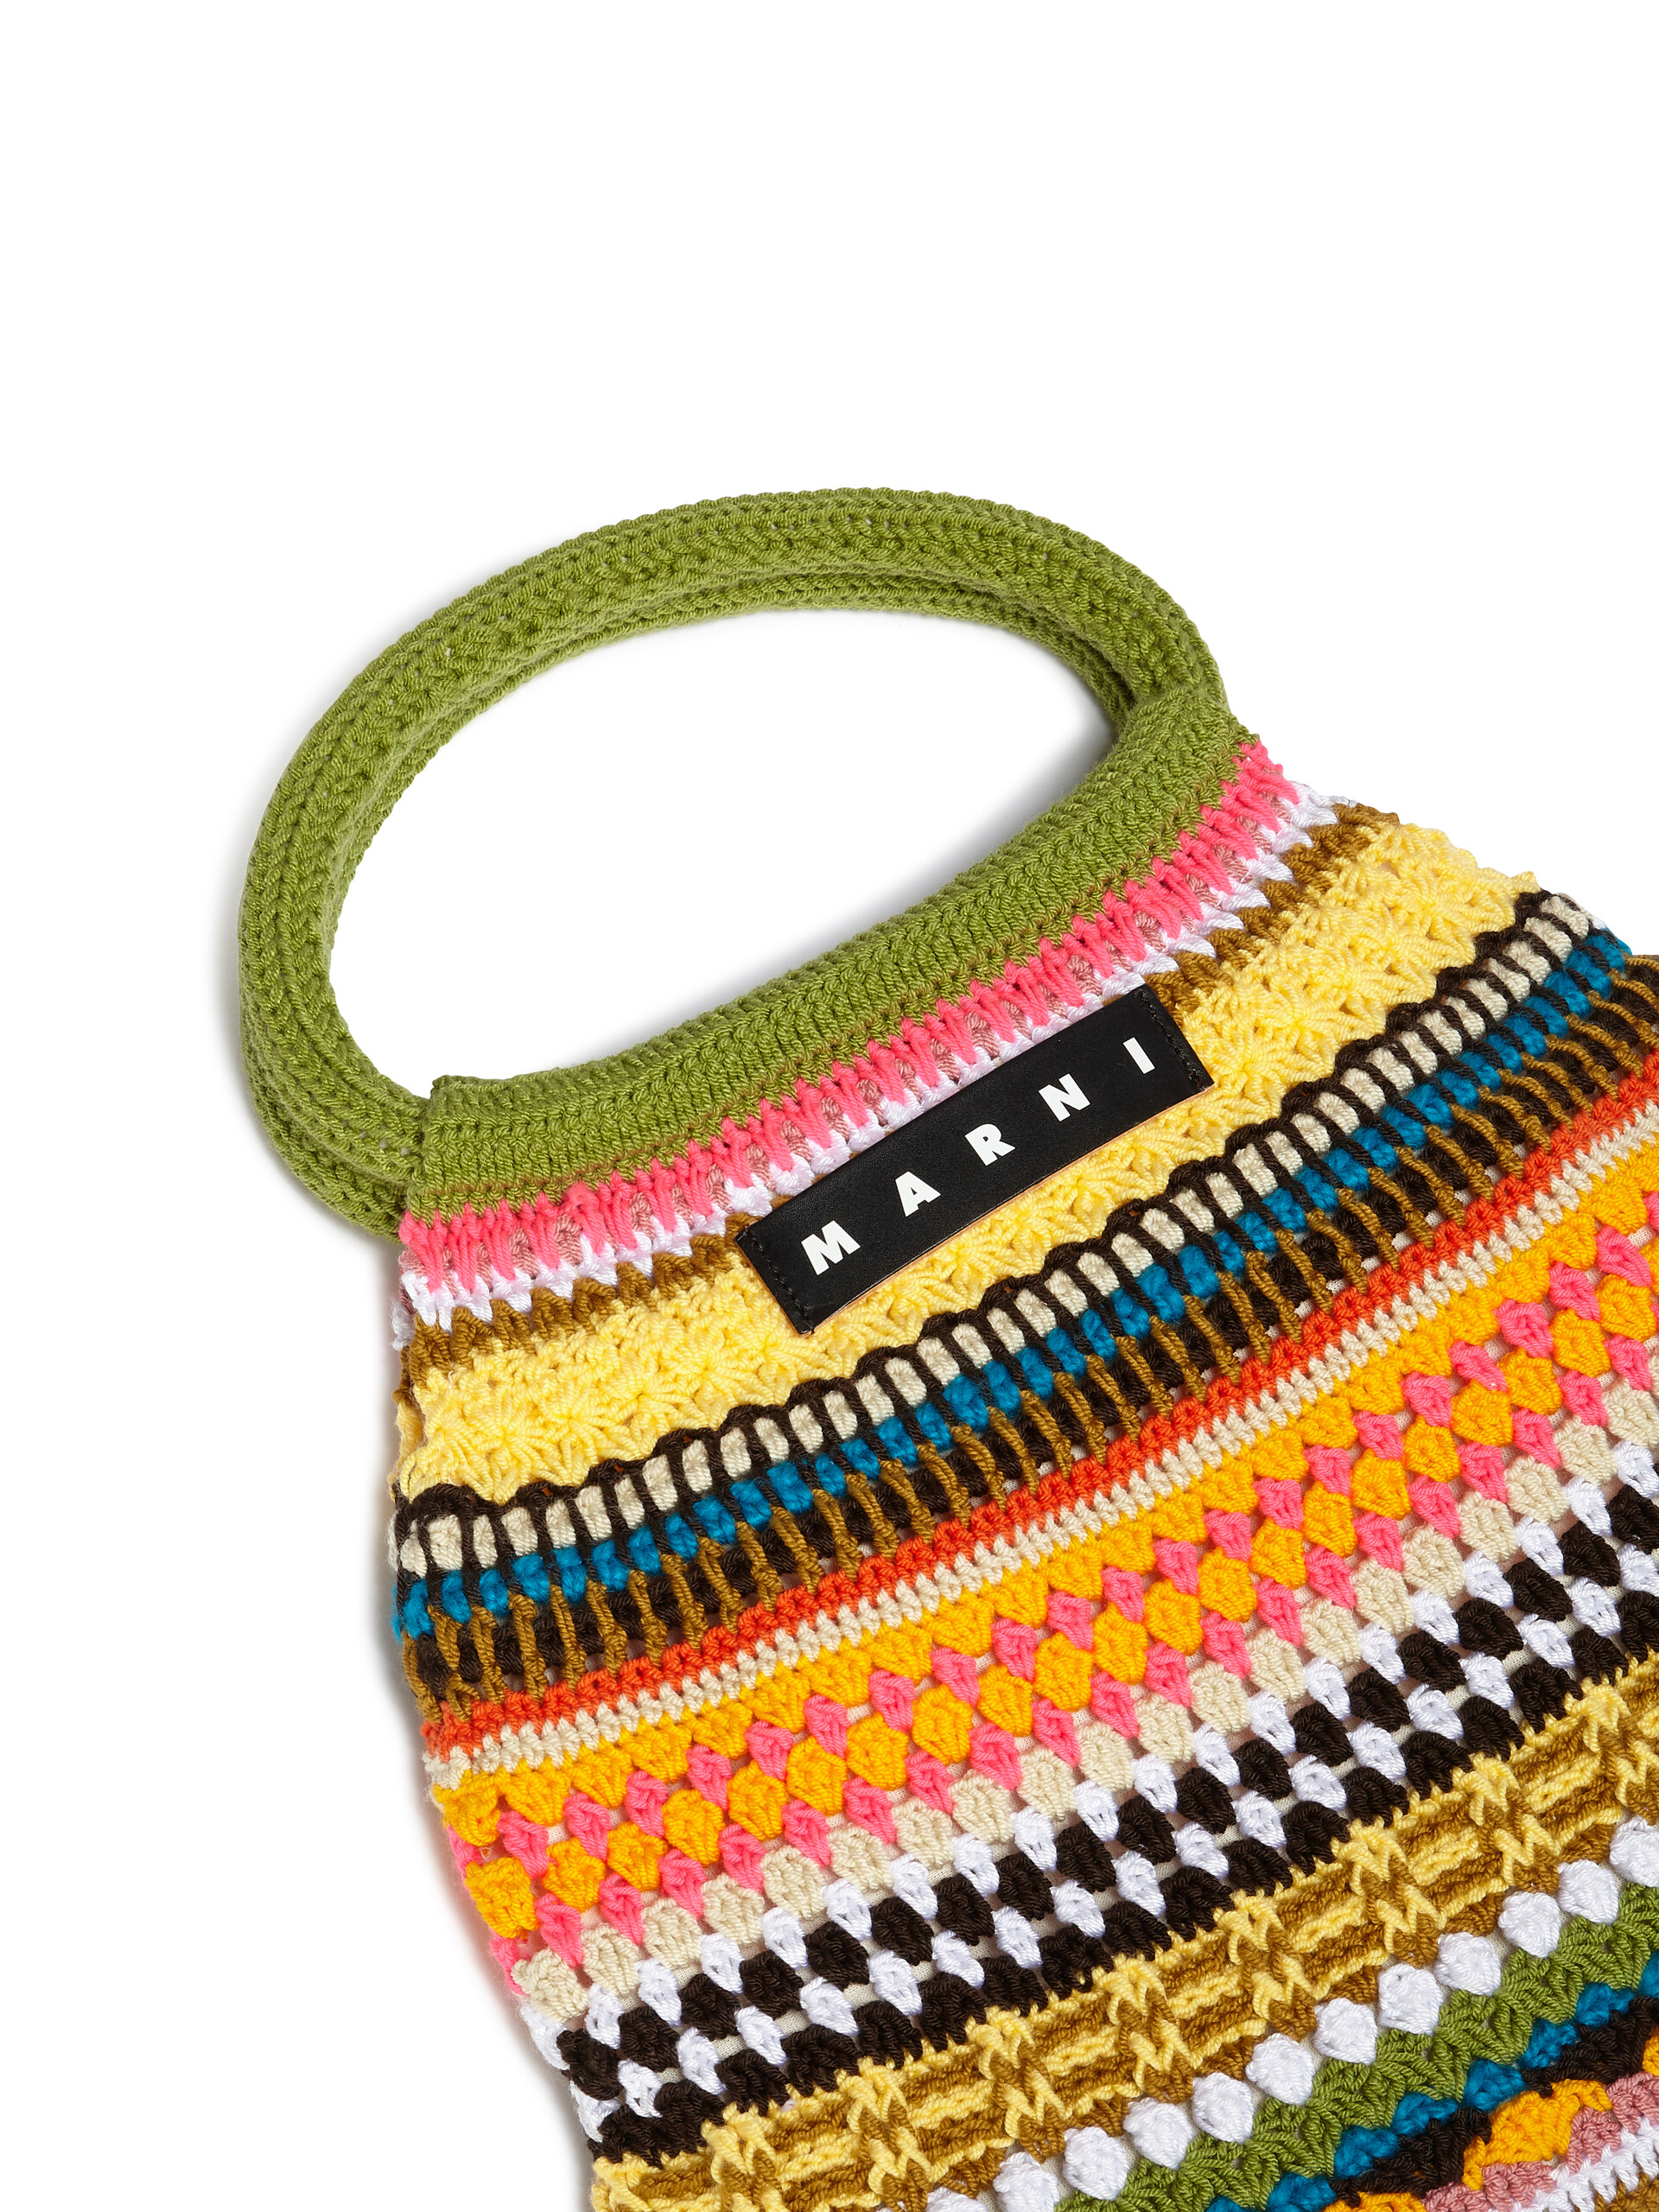 MARNI MARKET bag in green crochet - Furniture - Image 4